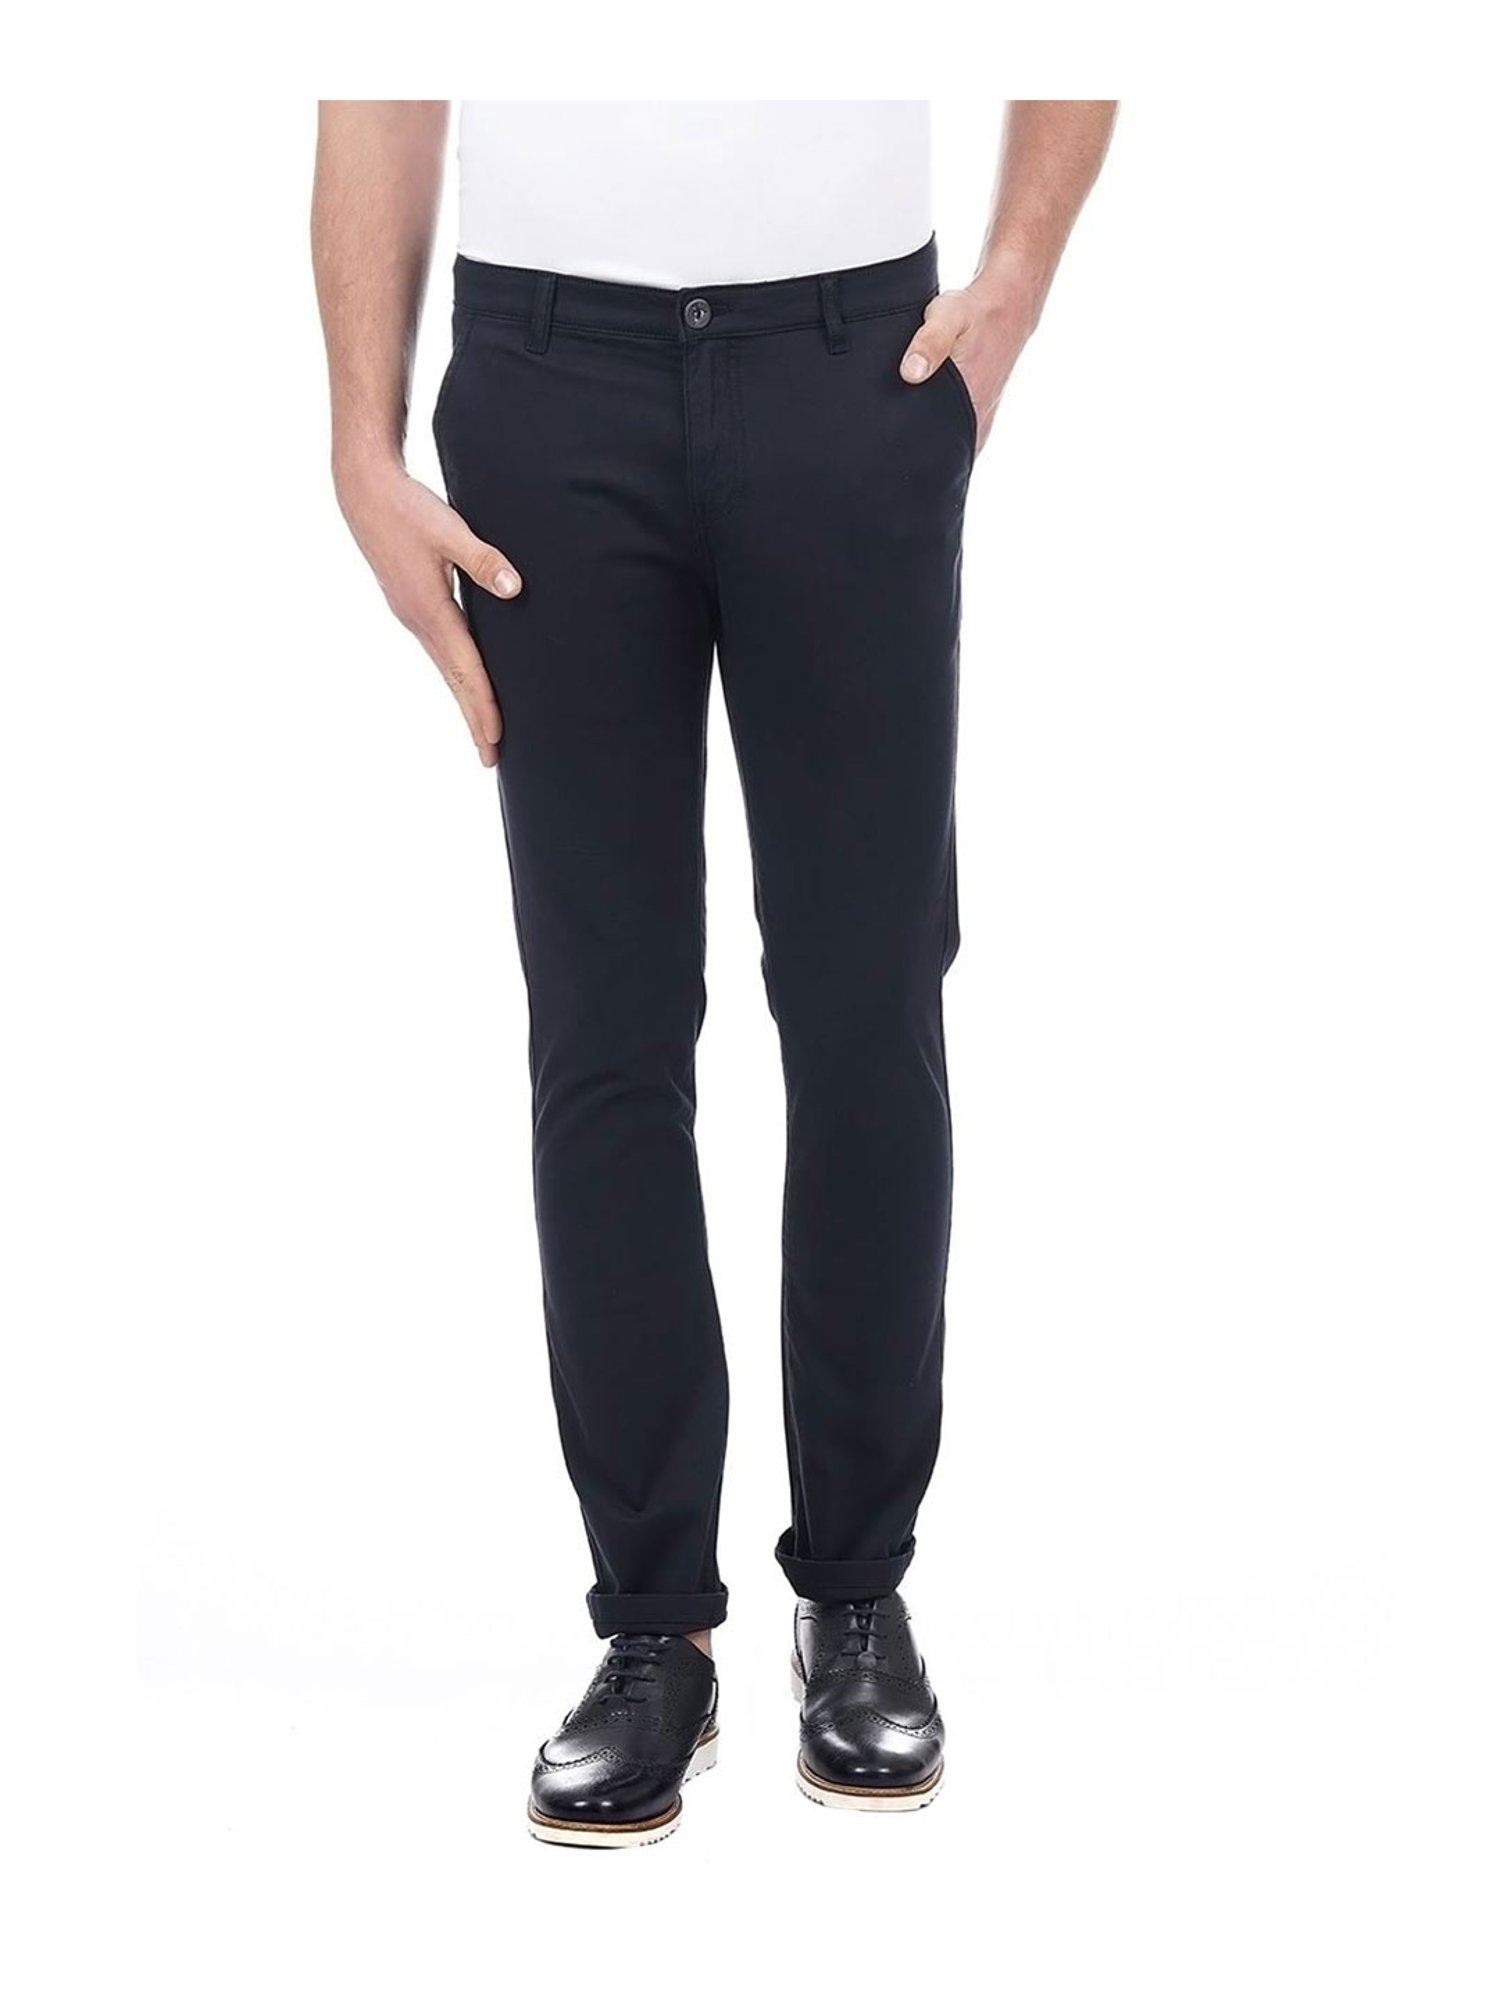 Buy Khaki Trousers  Pants for Men by Pepe Jeans Online  Ajiocom